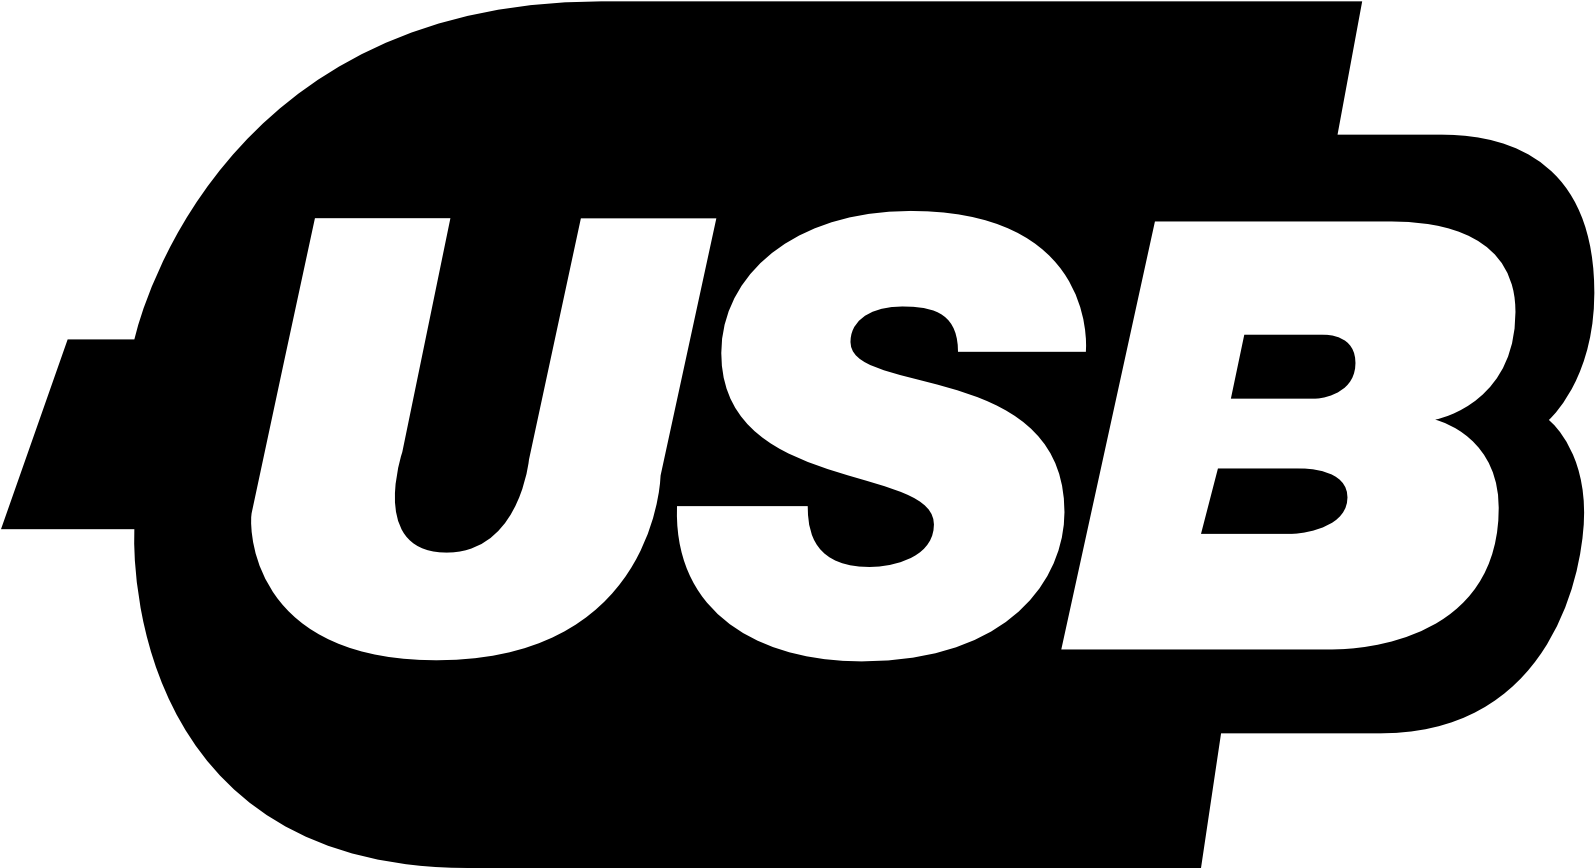 U S B Logo Graphic PNG image